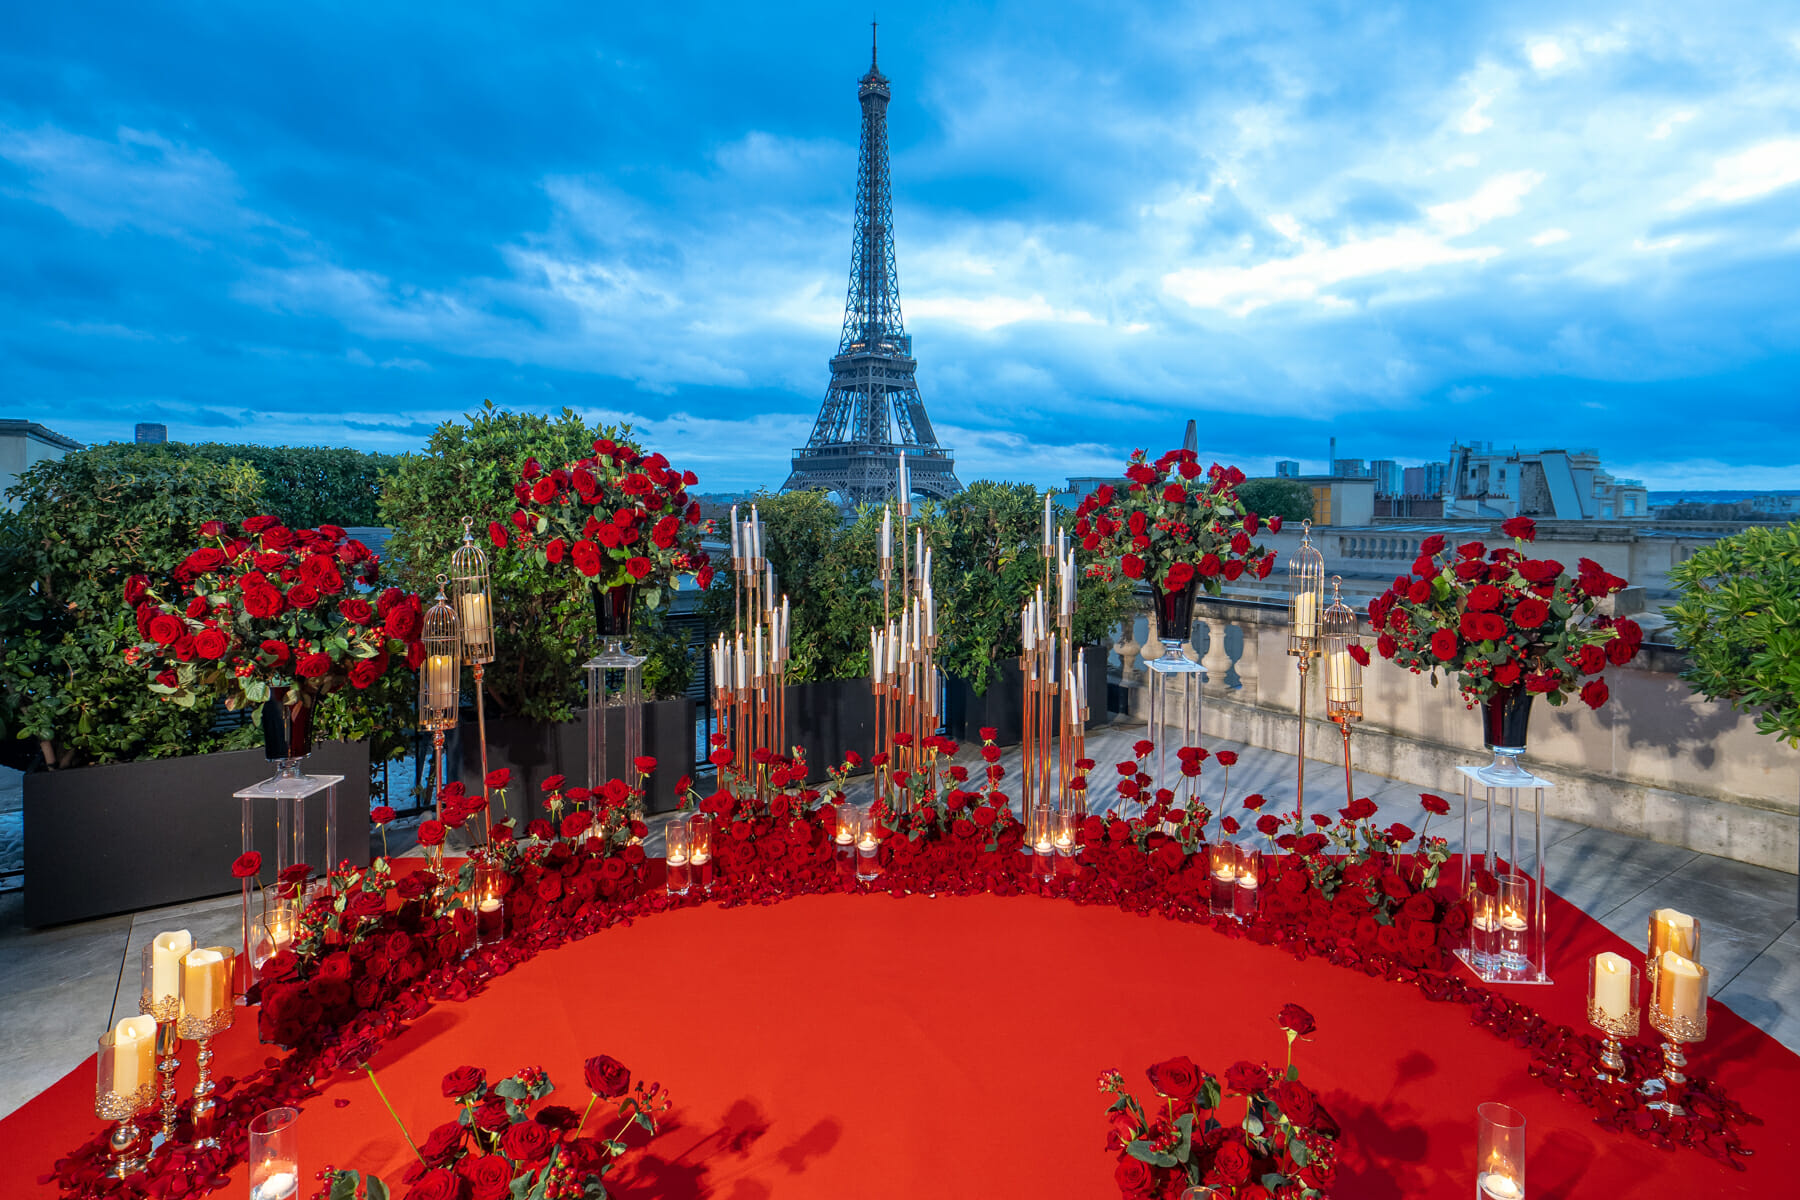 Paris Design, decor, and production for luxury events.